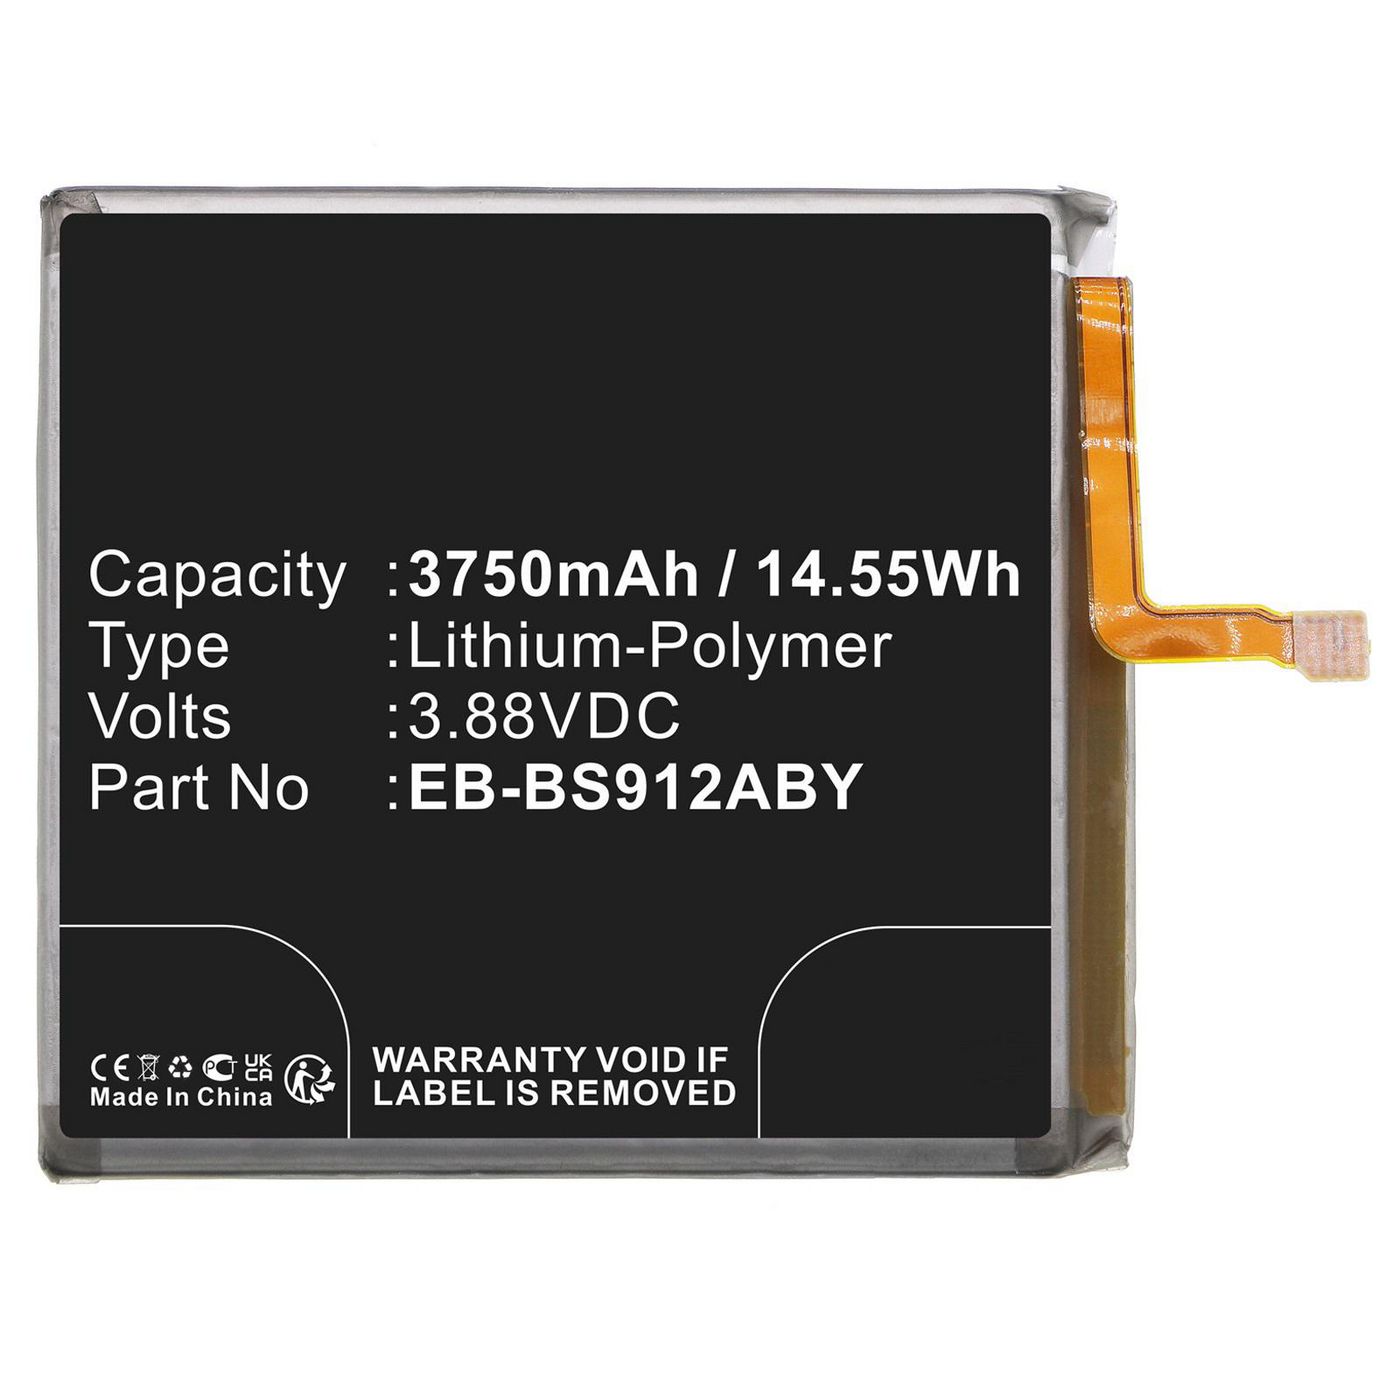 CoreParts MBXMP-BA1724 W128426854 Battery for Samsung Mobile, 